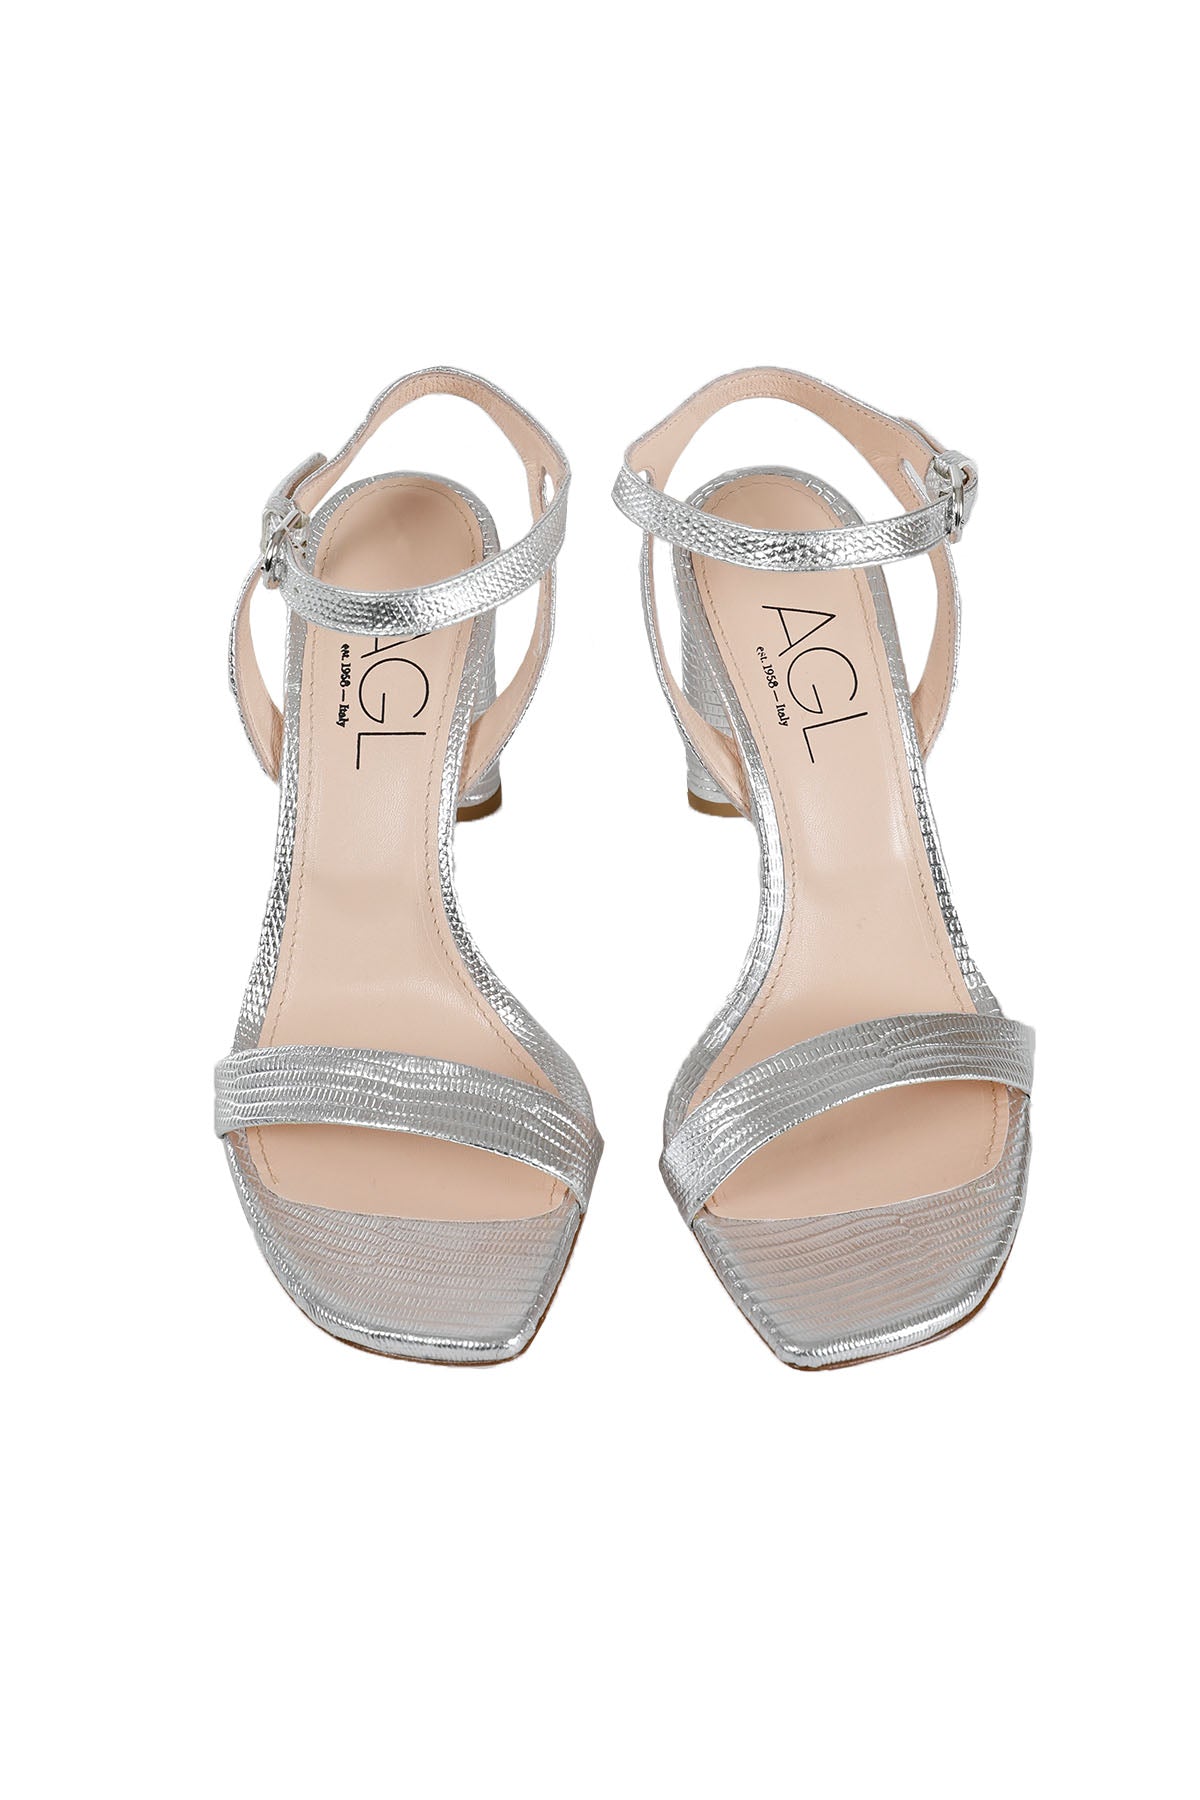 Agl Velda High Küt Burun Topuklu Sandalet Ayakkabı-Libas Trendy Fashion Store